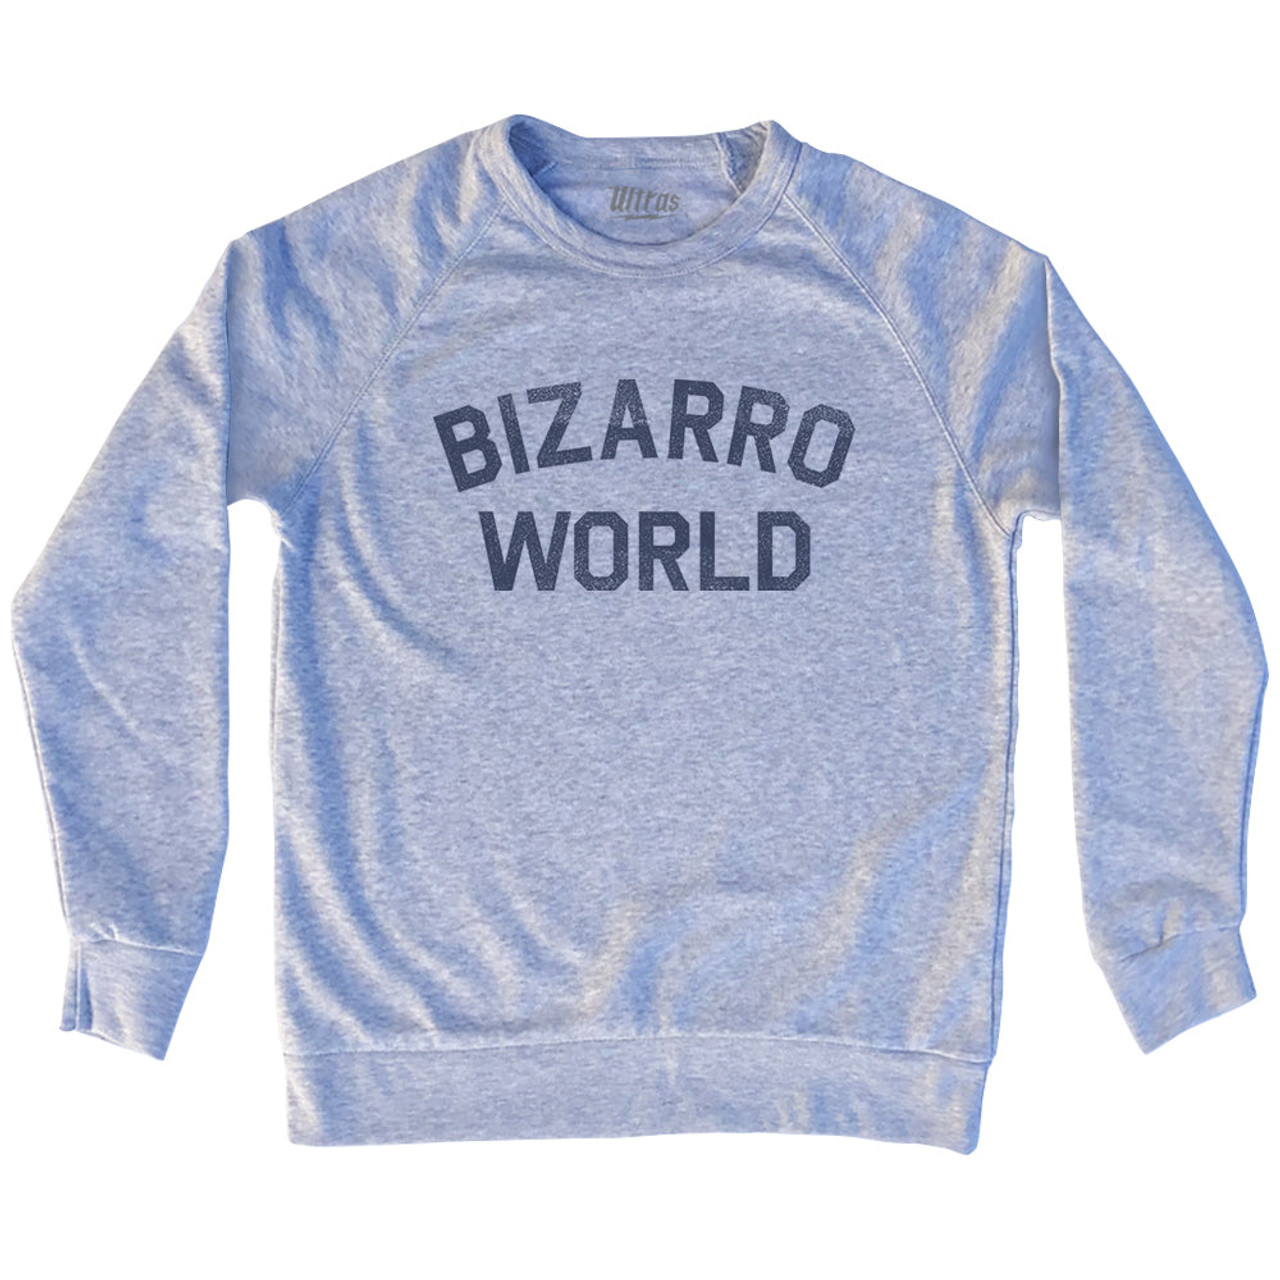 Bizarro World Adult Tri-Blend Sweatshirt - Grey Heather